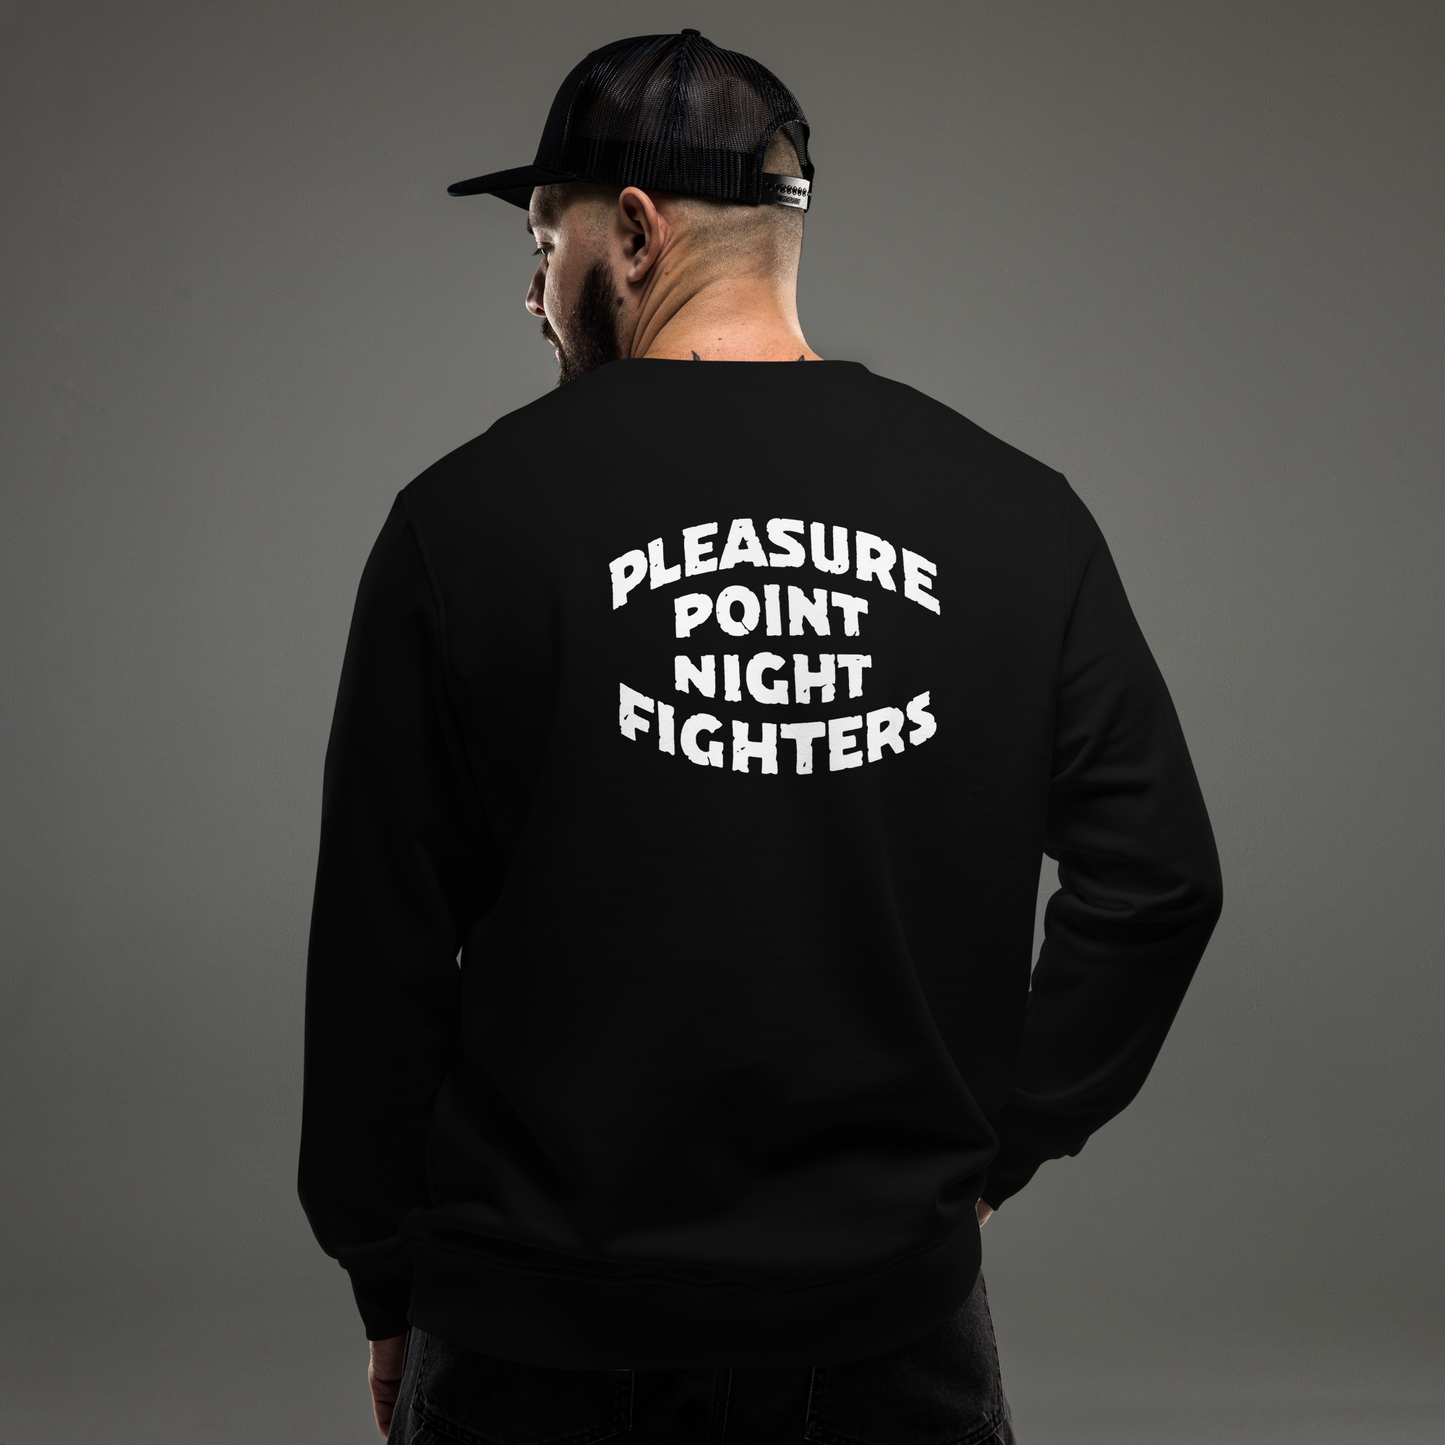 PPNF Custom - Limited Time - Pleasure Point Night Fighters - Unisex organic sweatshirt